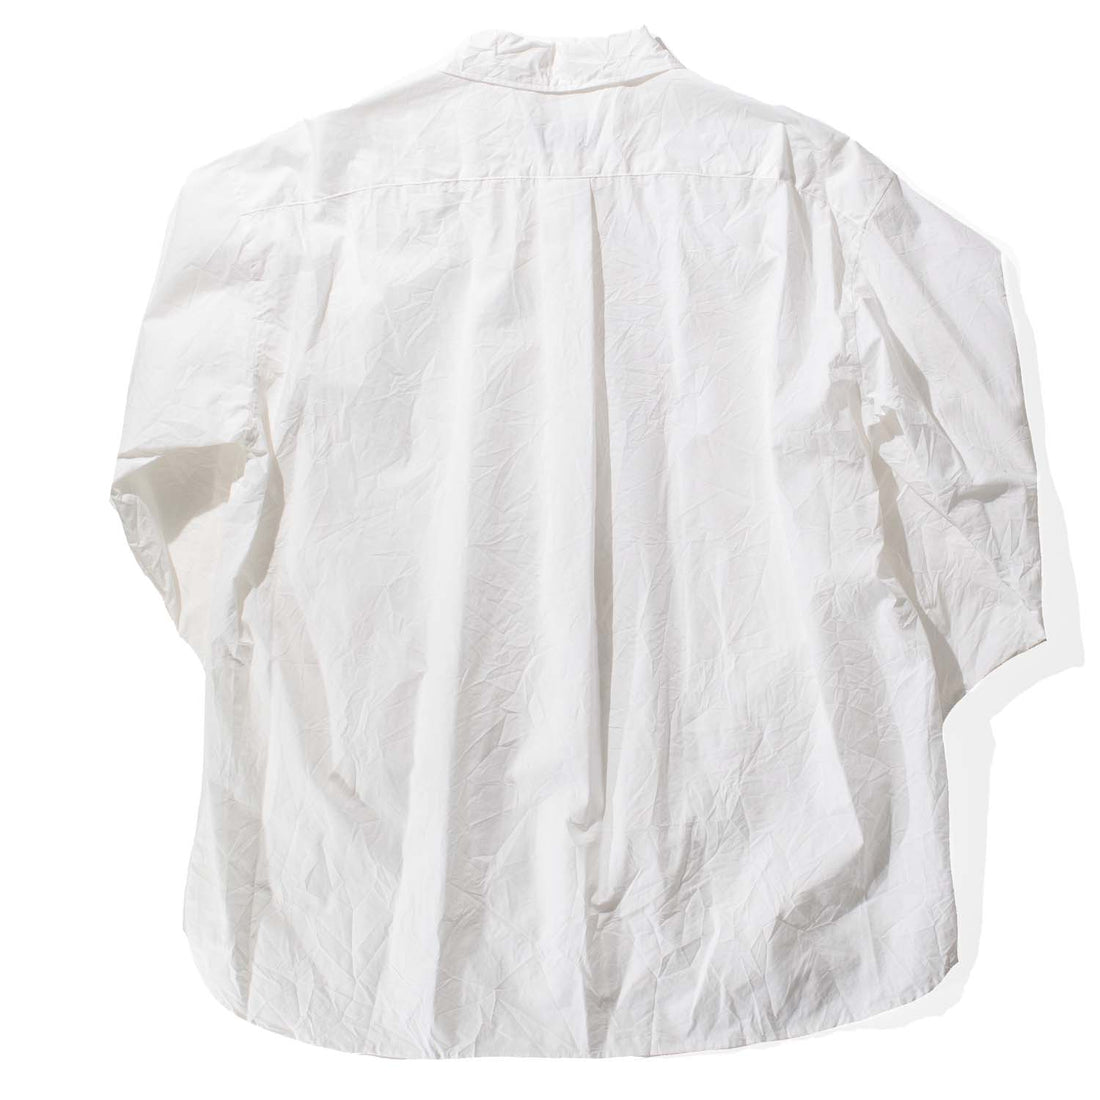 Sayaka Davis Crinkled Shirt in White